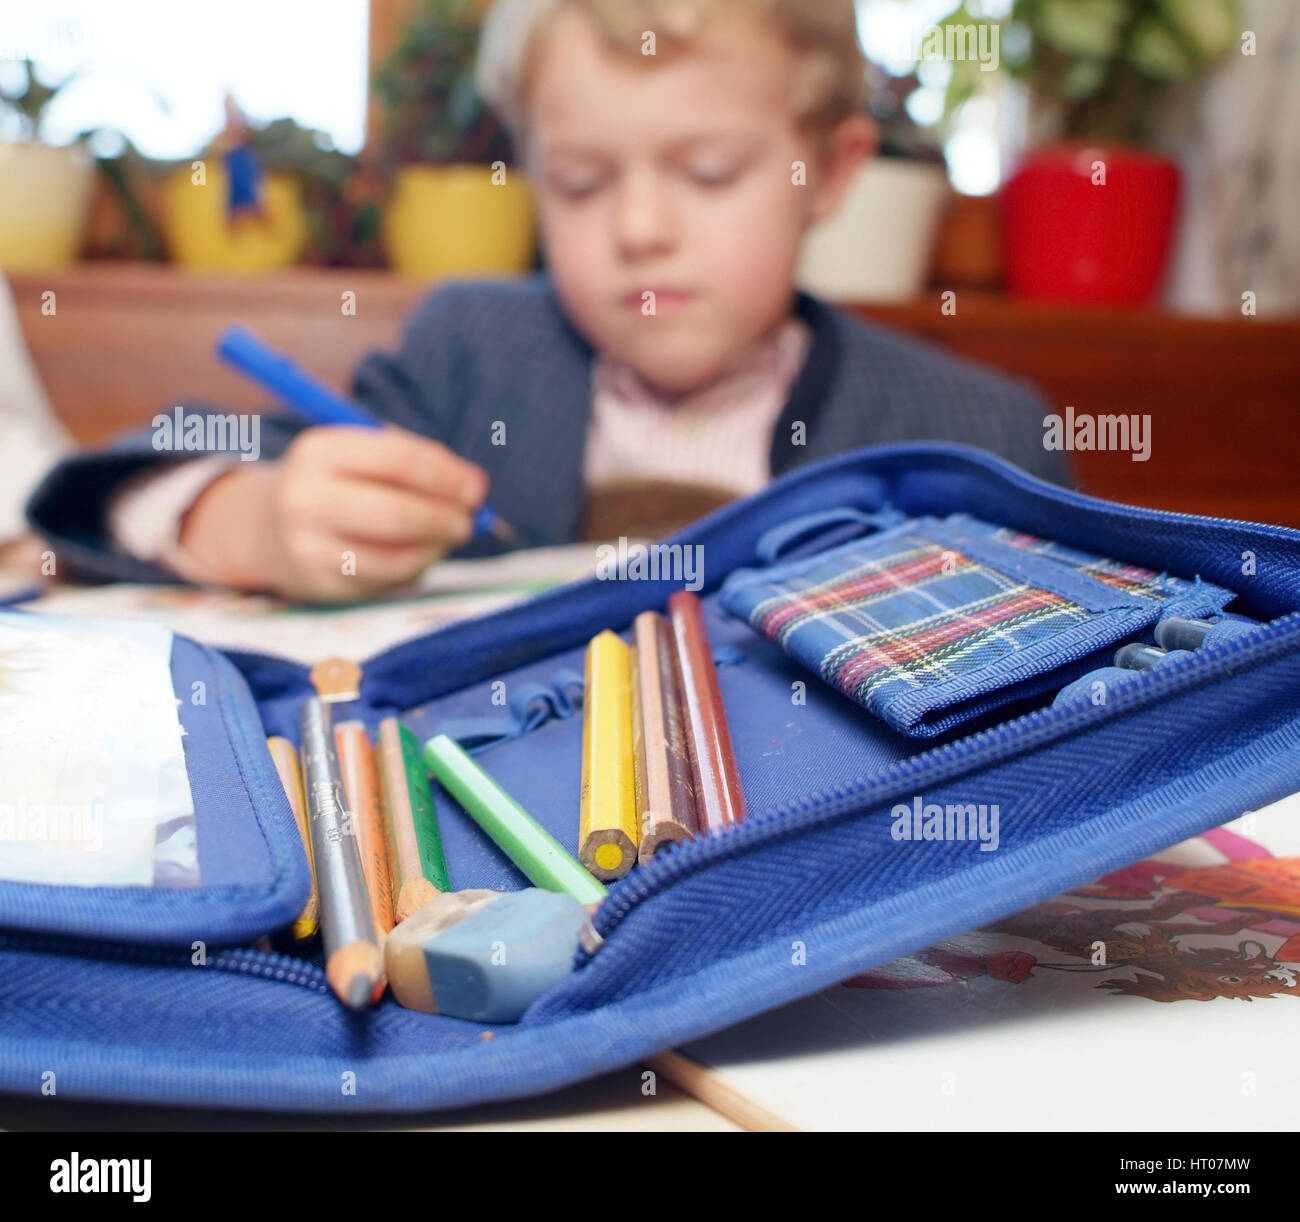 Schuljunge macht Hausaufgabe - schoolboy doing homework Stock Photo